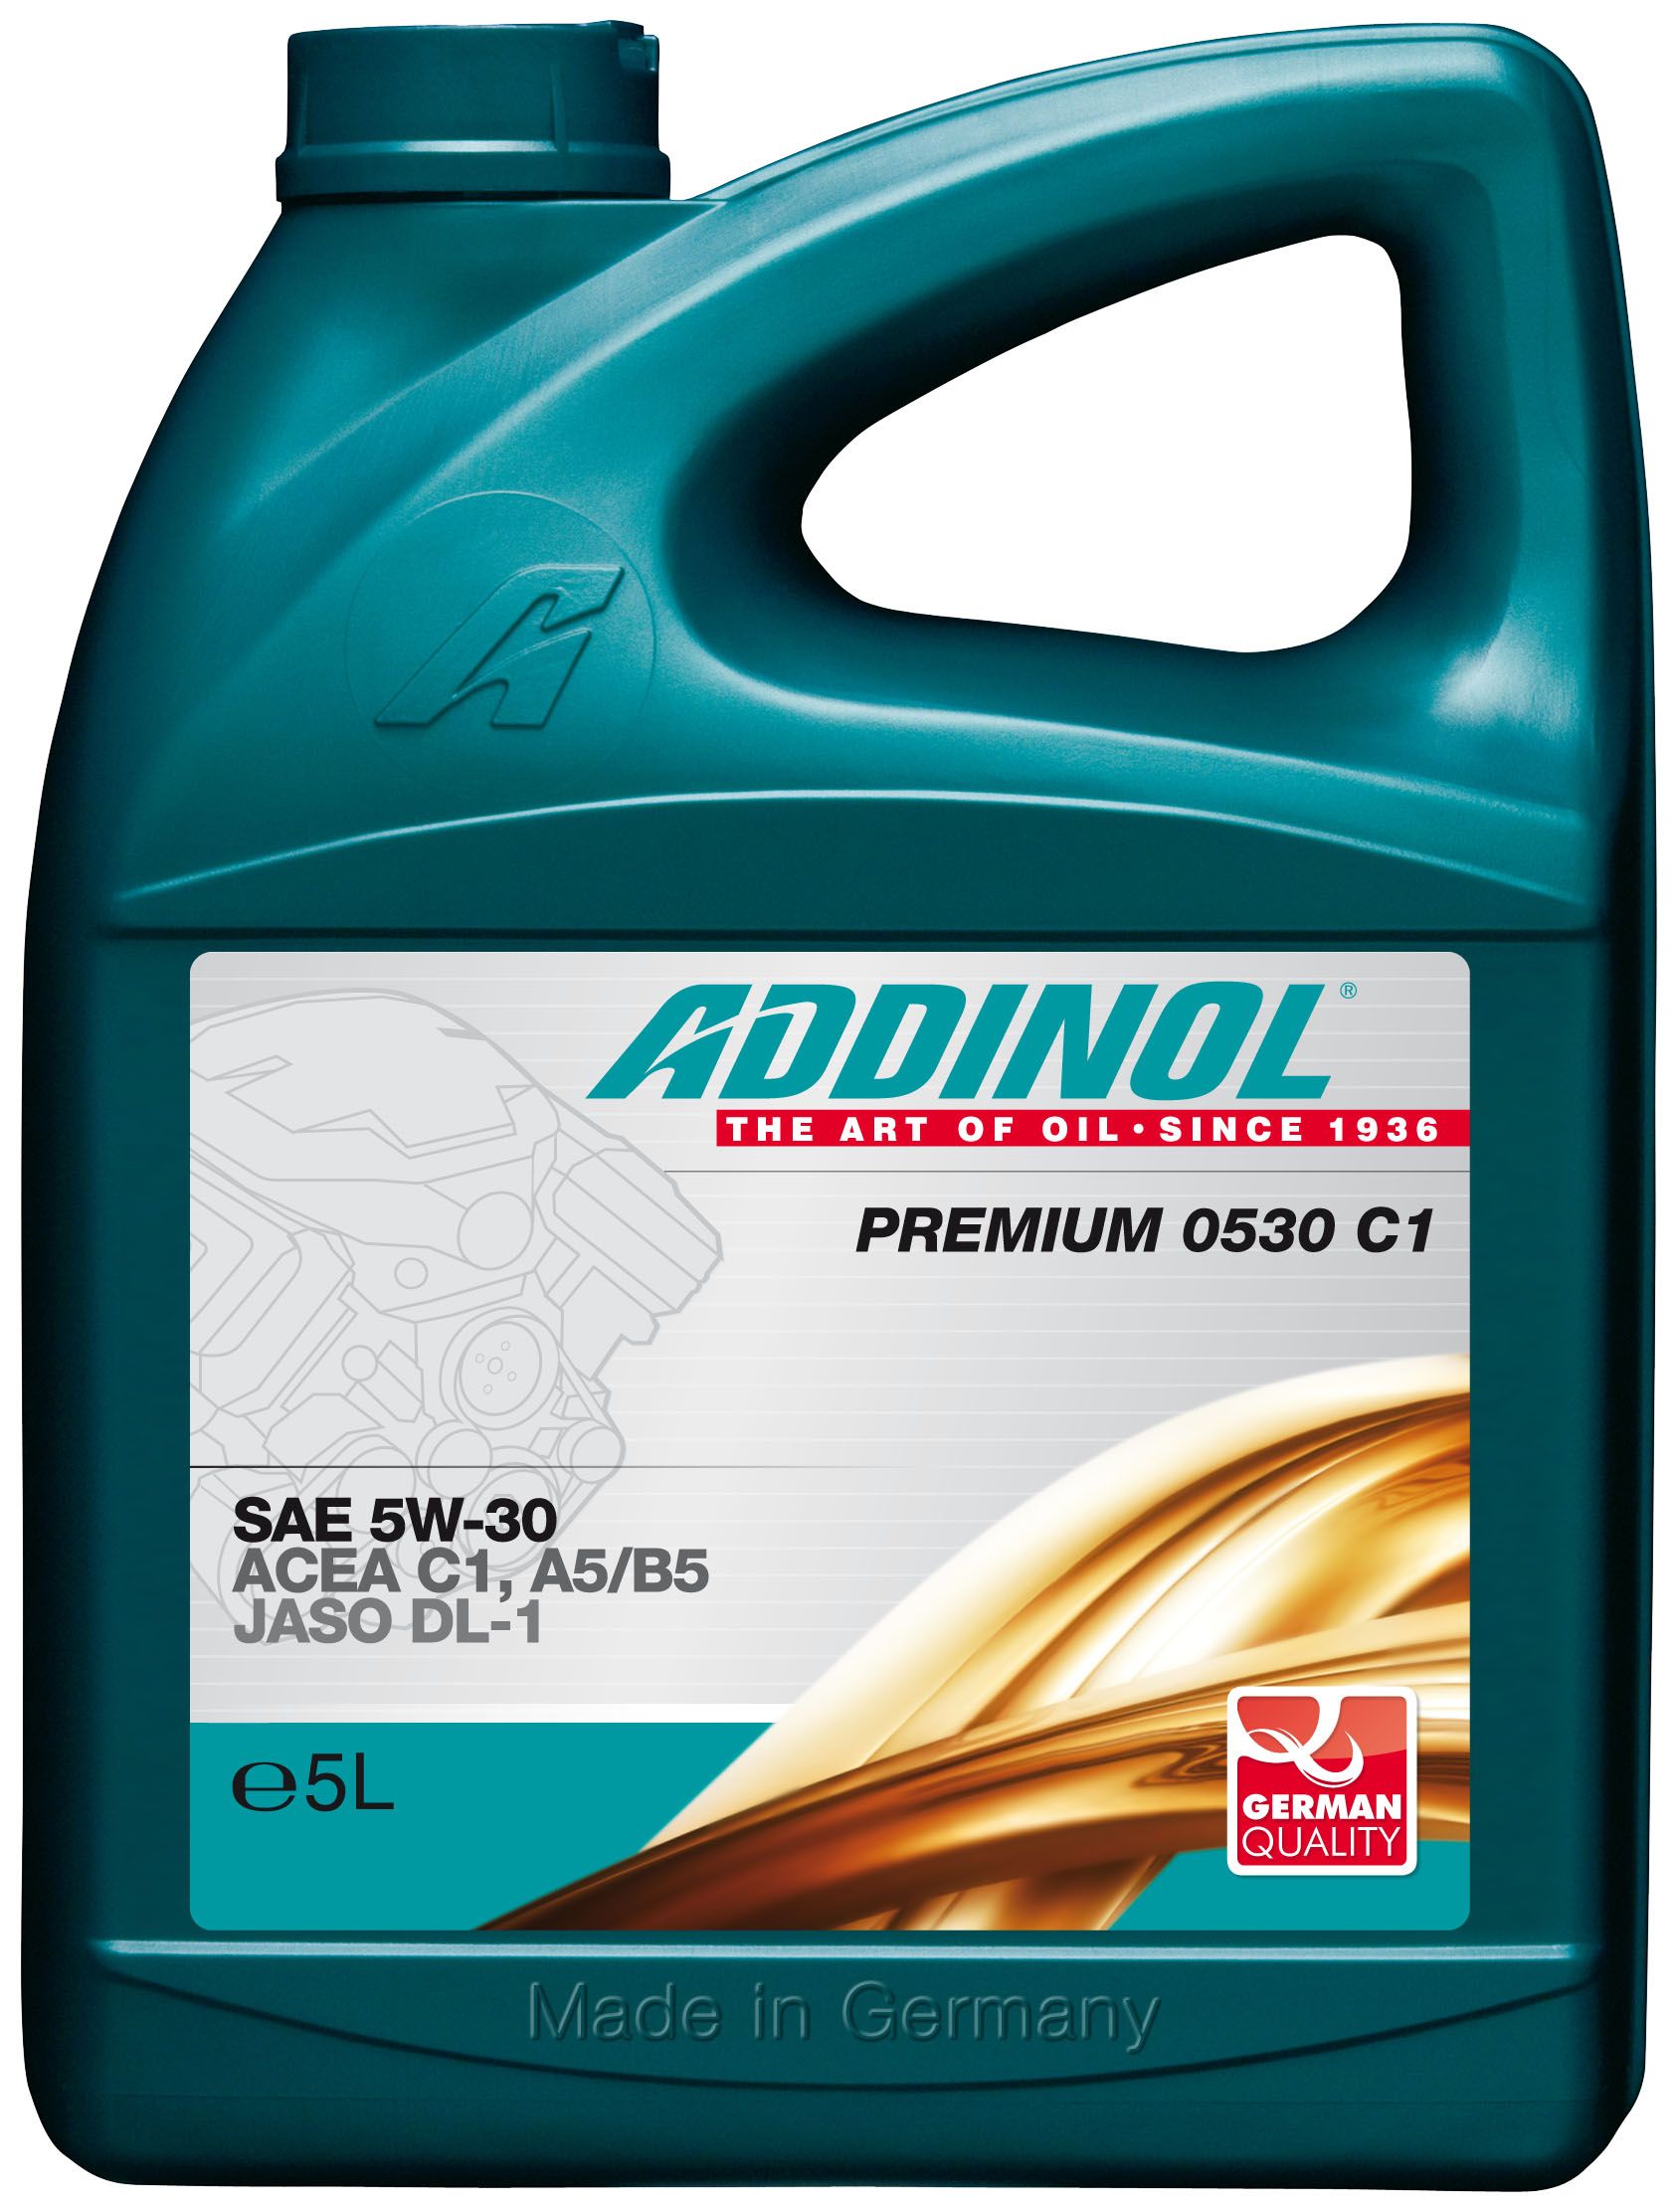 Масло для двигателя производитель. Addinol 4014766241108 масло моторное синтетическое "Giga Light (Motorenol) MV 0530 ll 5w-30", 5л. Addinol Premium 0530 c3-DX 5w-30 5л. Addinol Diesel Longlife MD 1548 (SAE 15w-40). Addinol Semi Synth 1040.